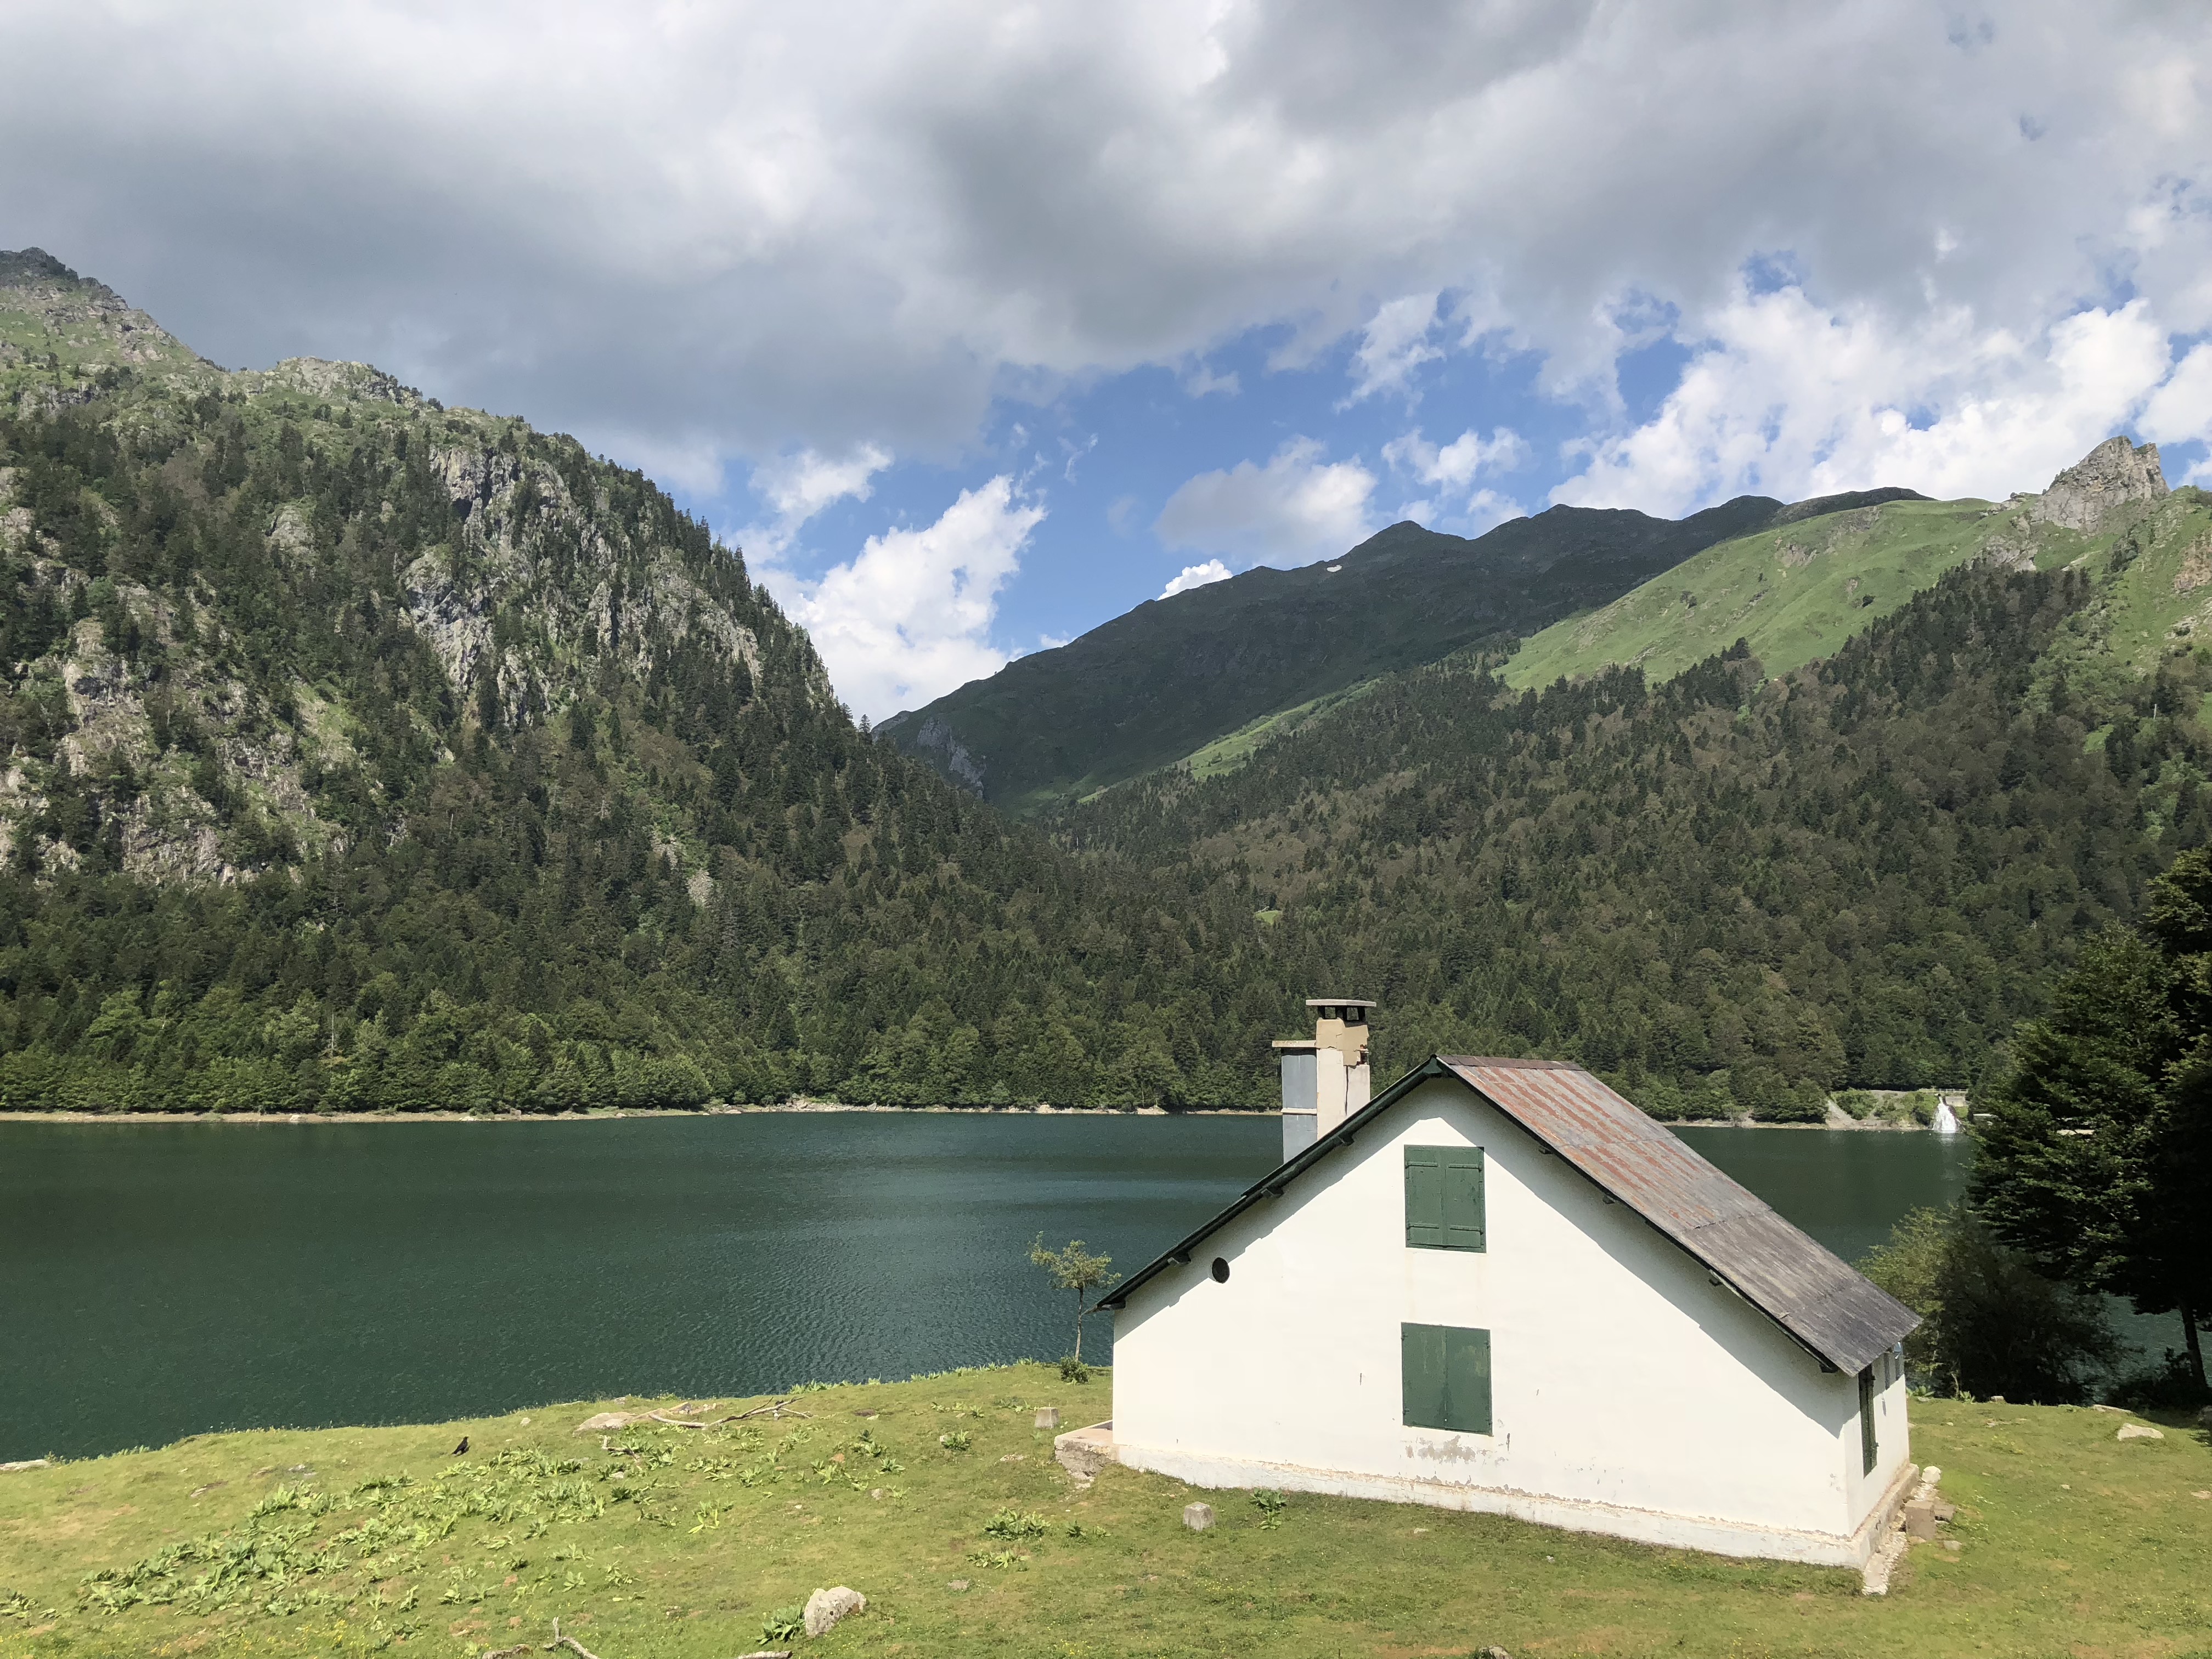 Pretty lake with cabin